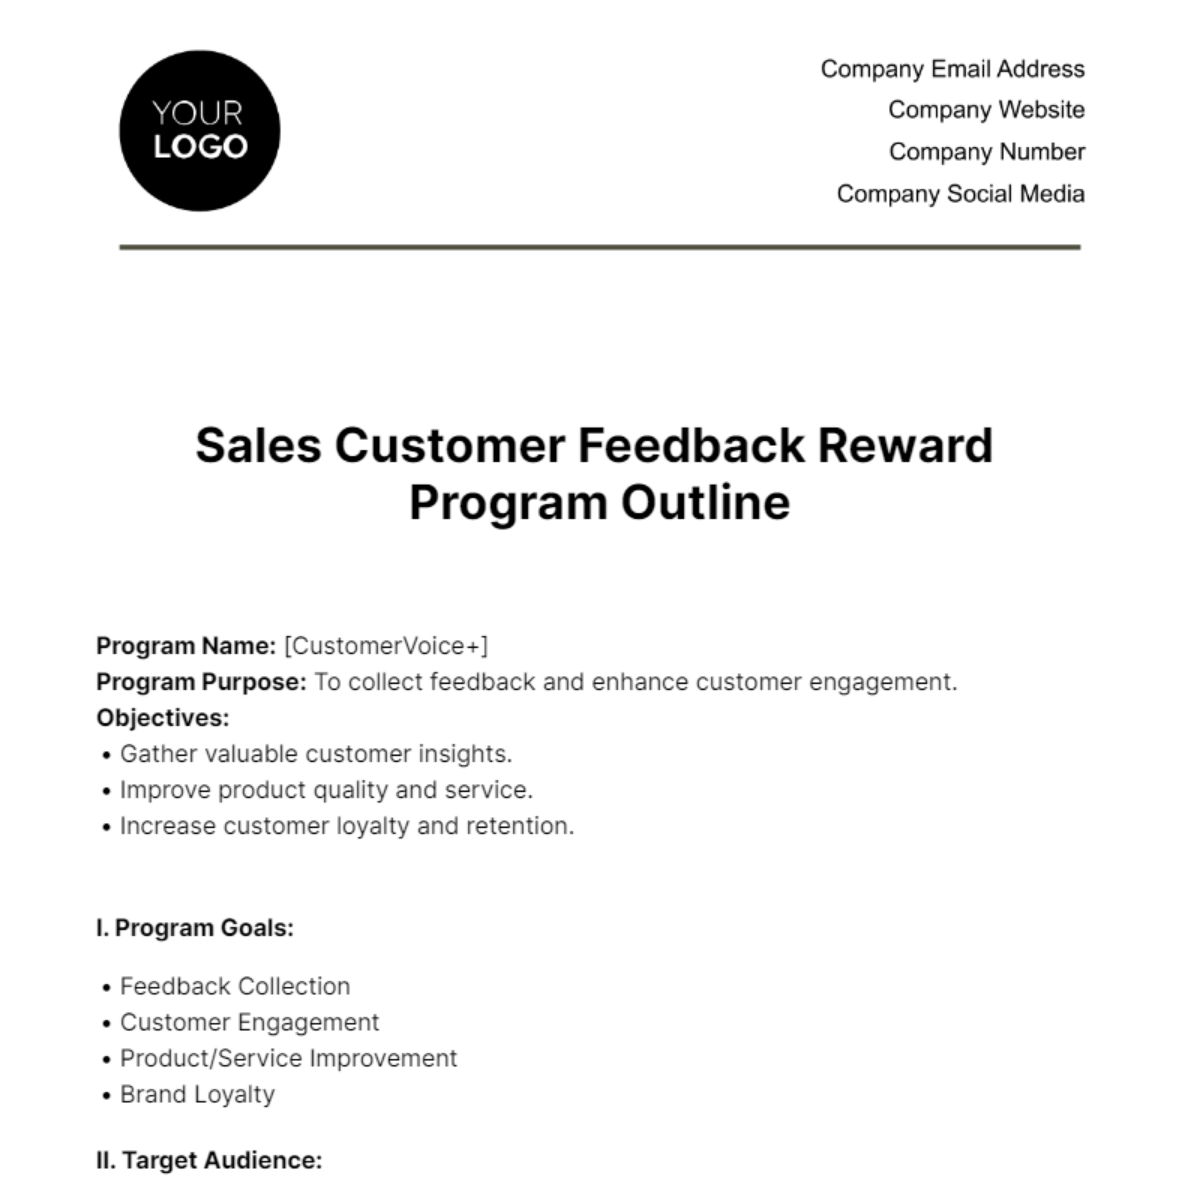 Sales Customer Feedback Reward Program Outline Template